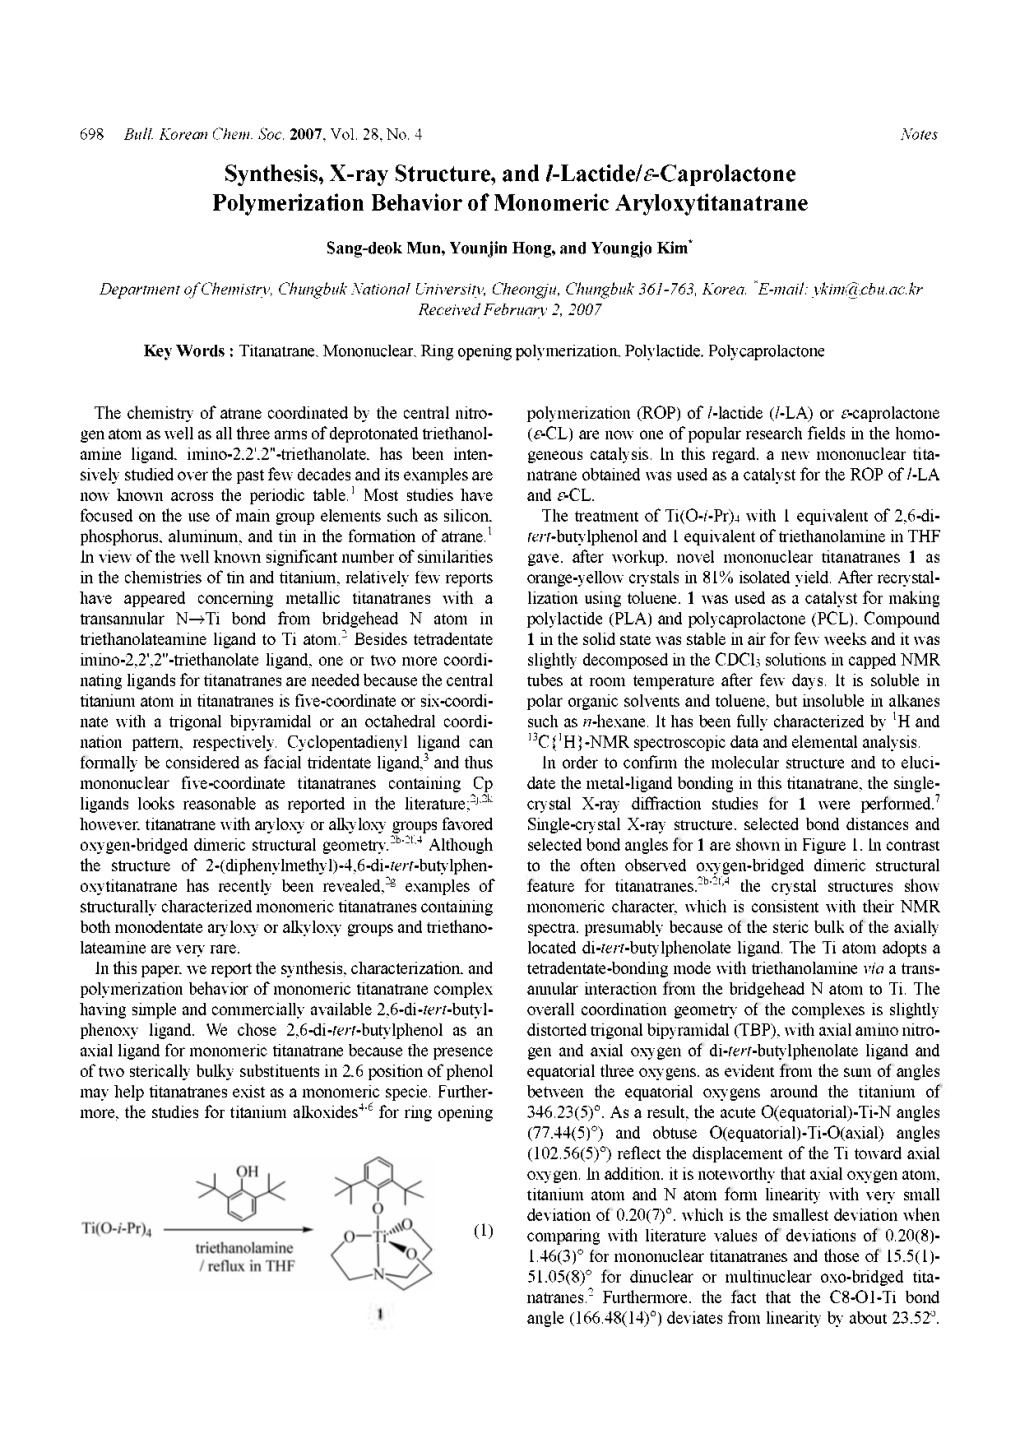 Lactide/^Caprolactone Polymerization Behavior of Monomeric Aryloxytitanatrane